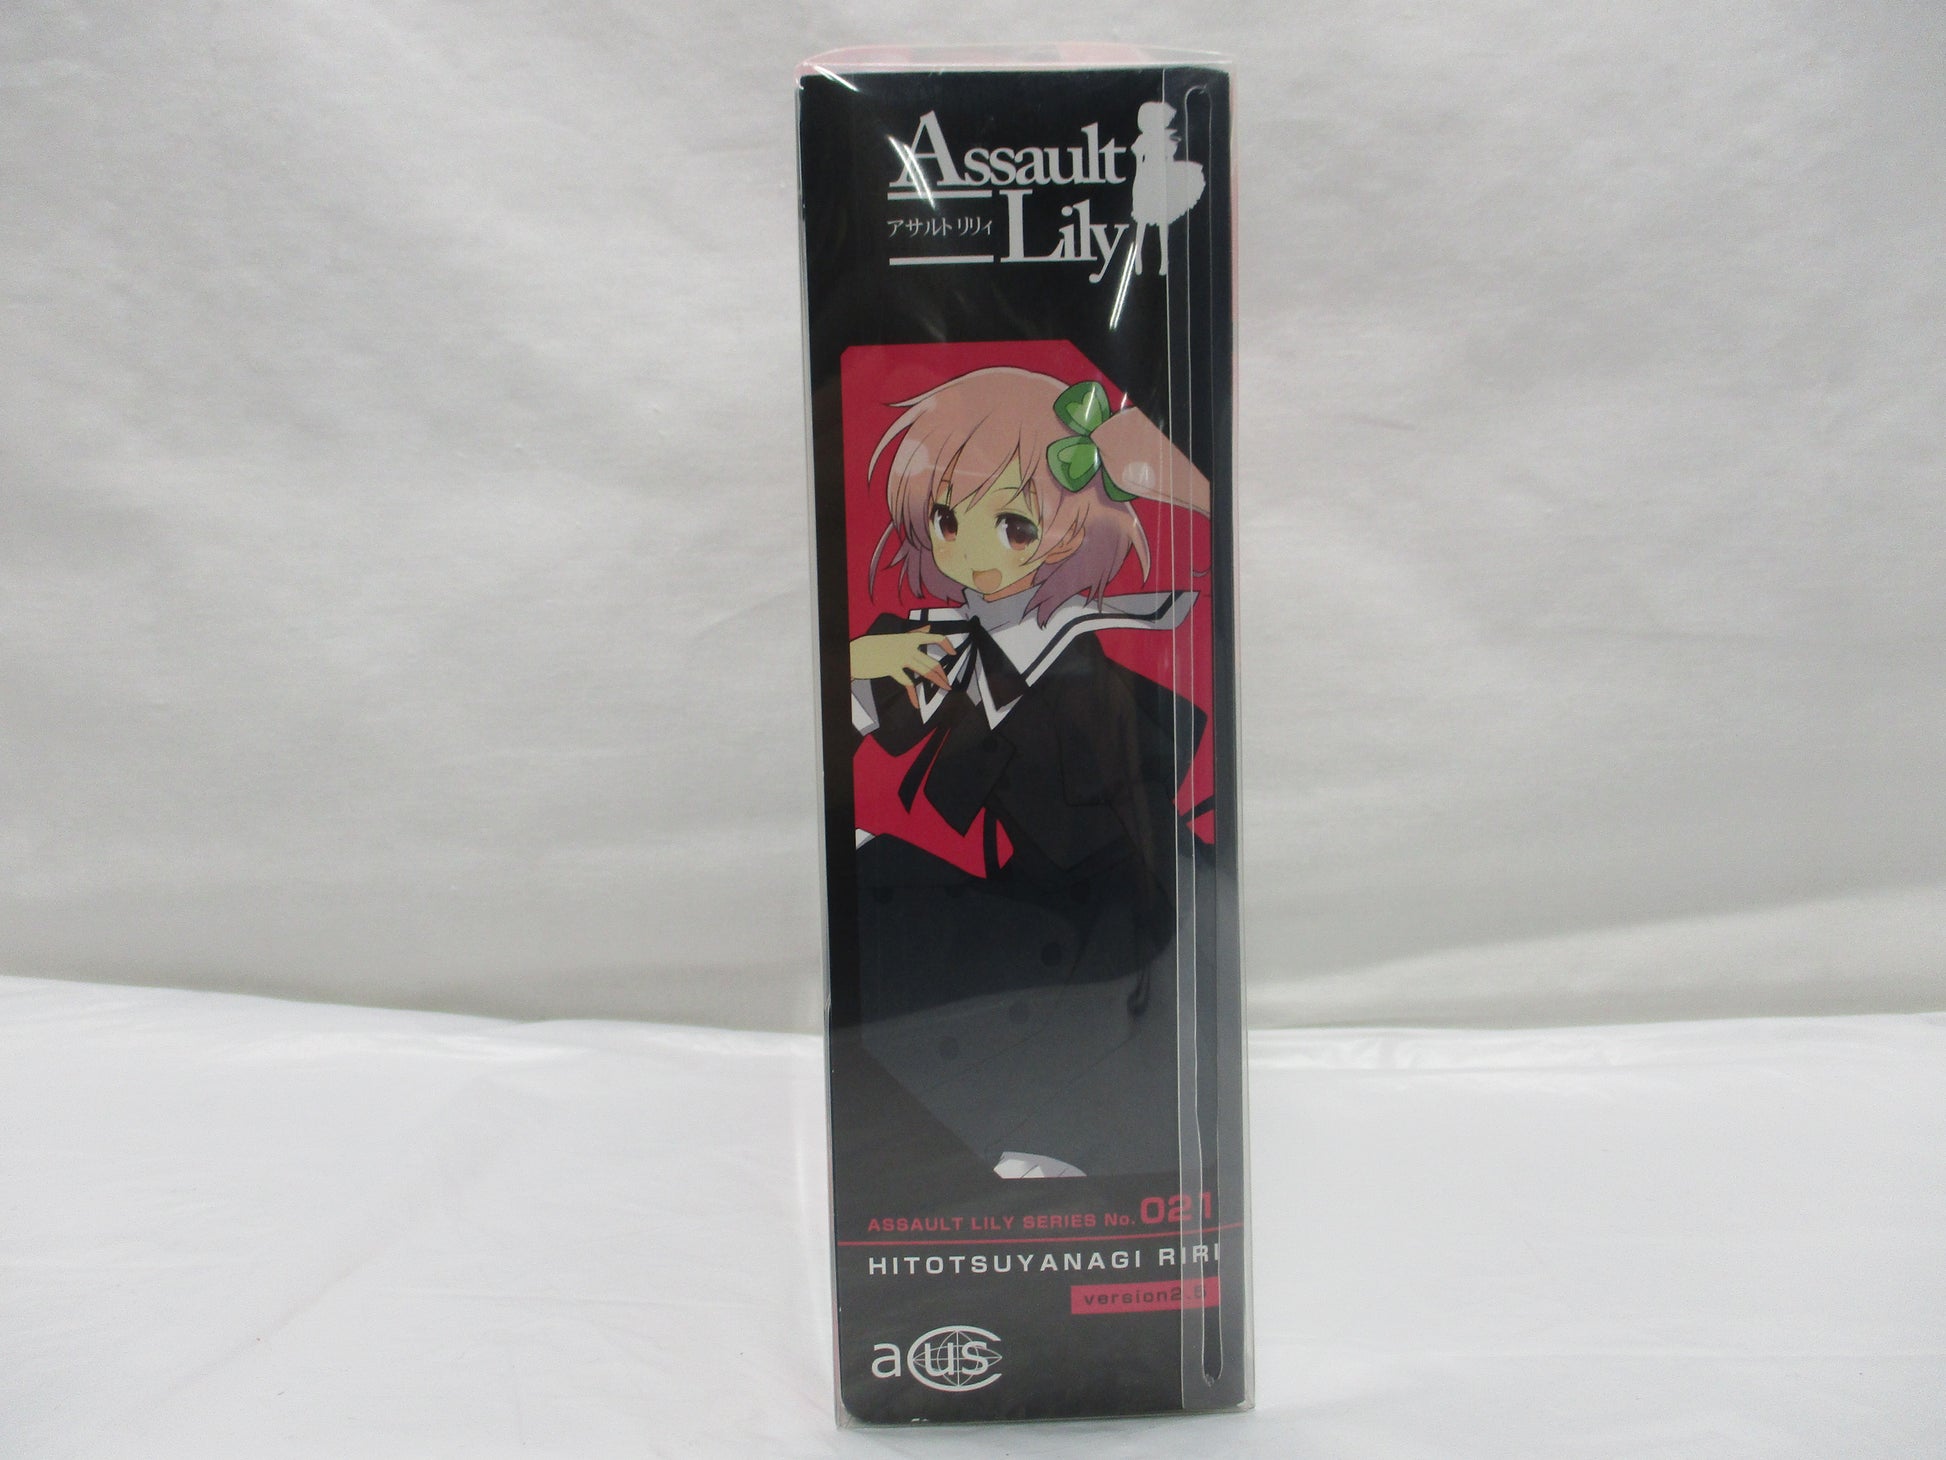 Azone 1/12 Assault Lily Series No.045 Andoh Tazusa, animota